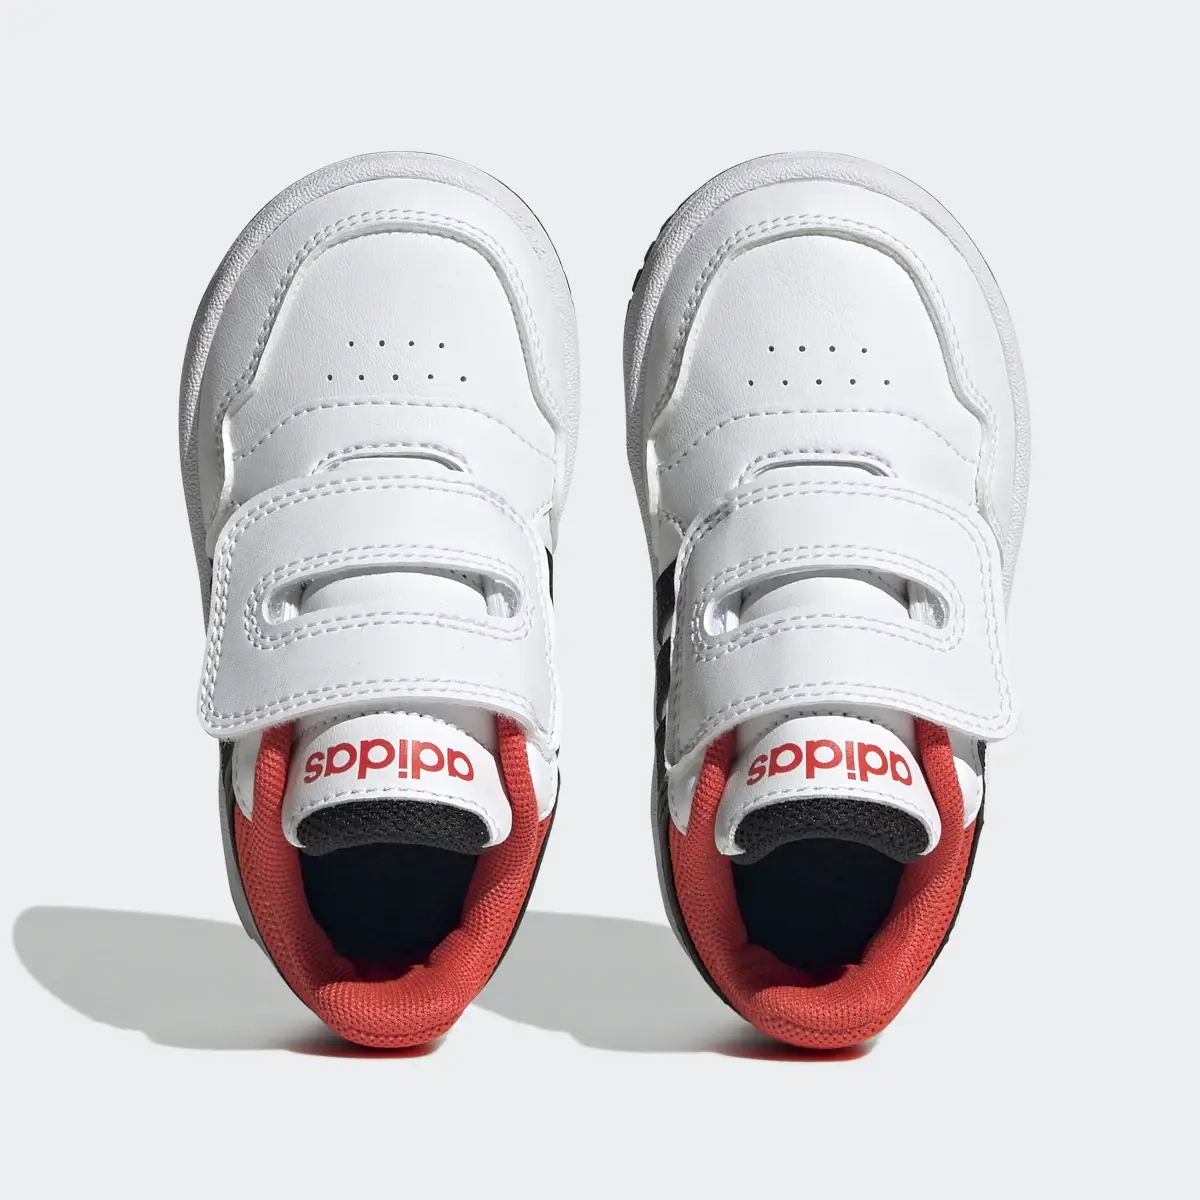 Adidas Scarpe Hoops. 3